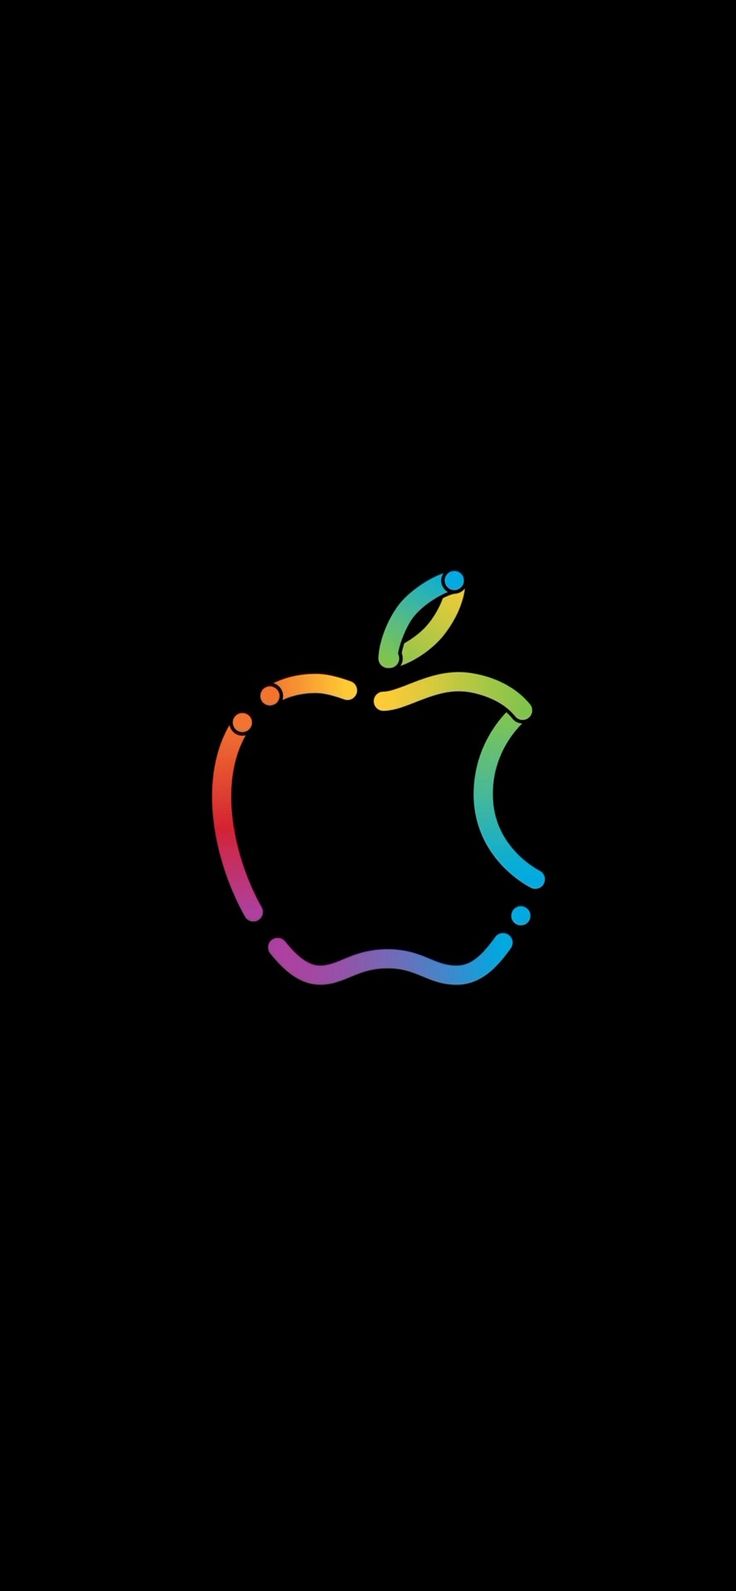 Apple Logo Animation iPhone 11 Promotional [LIVE Wallpaper] Central. Apple logo wallpaper iphone, Apple wallpaper iphone, iPhone wallpaper logo